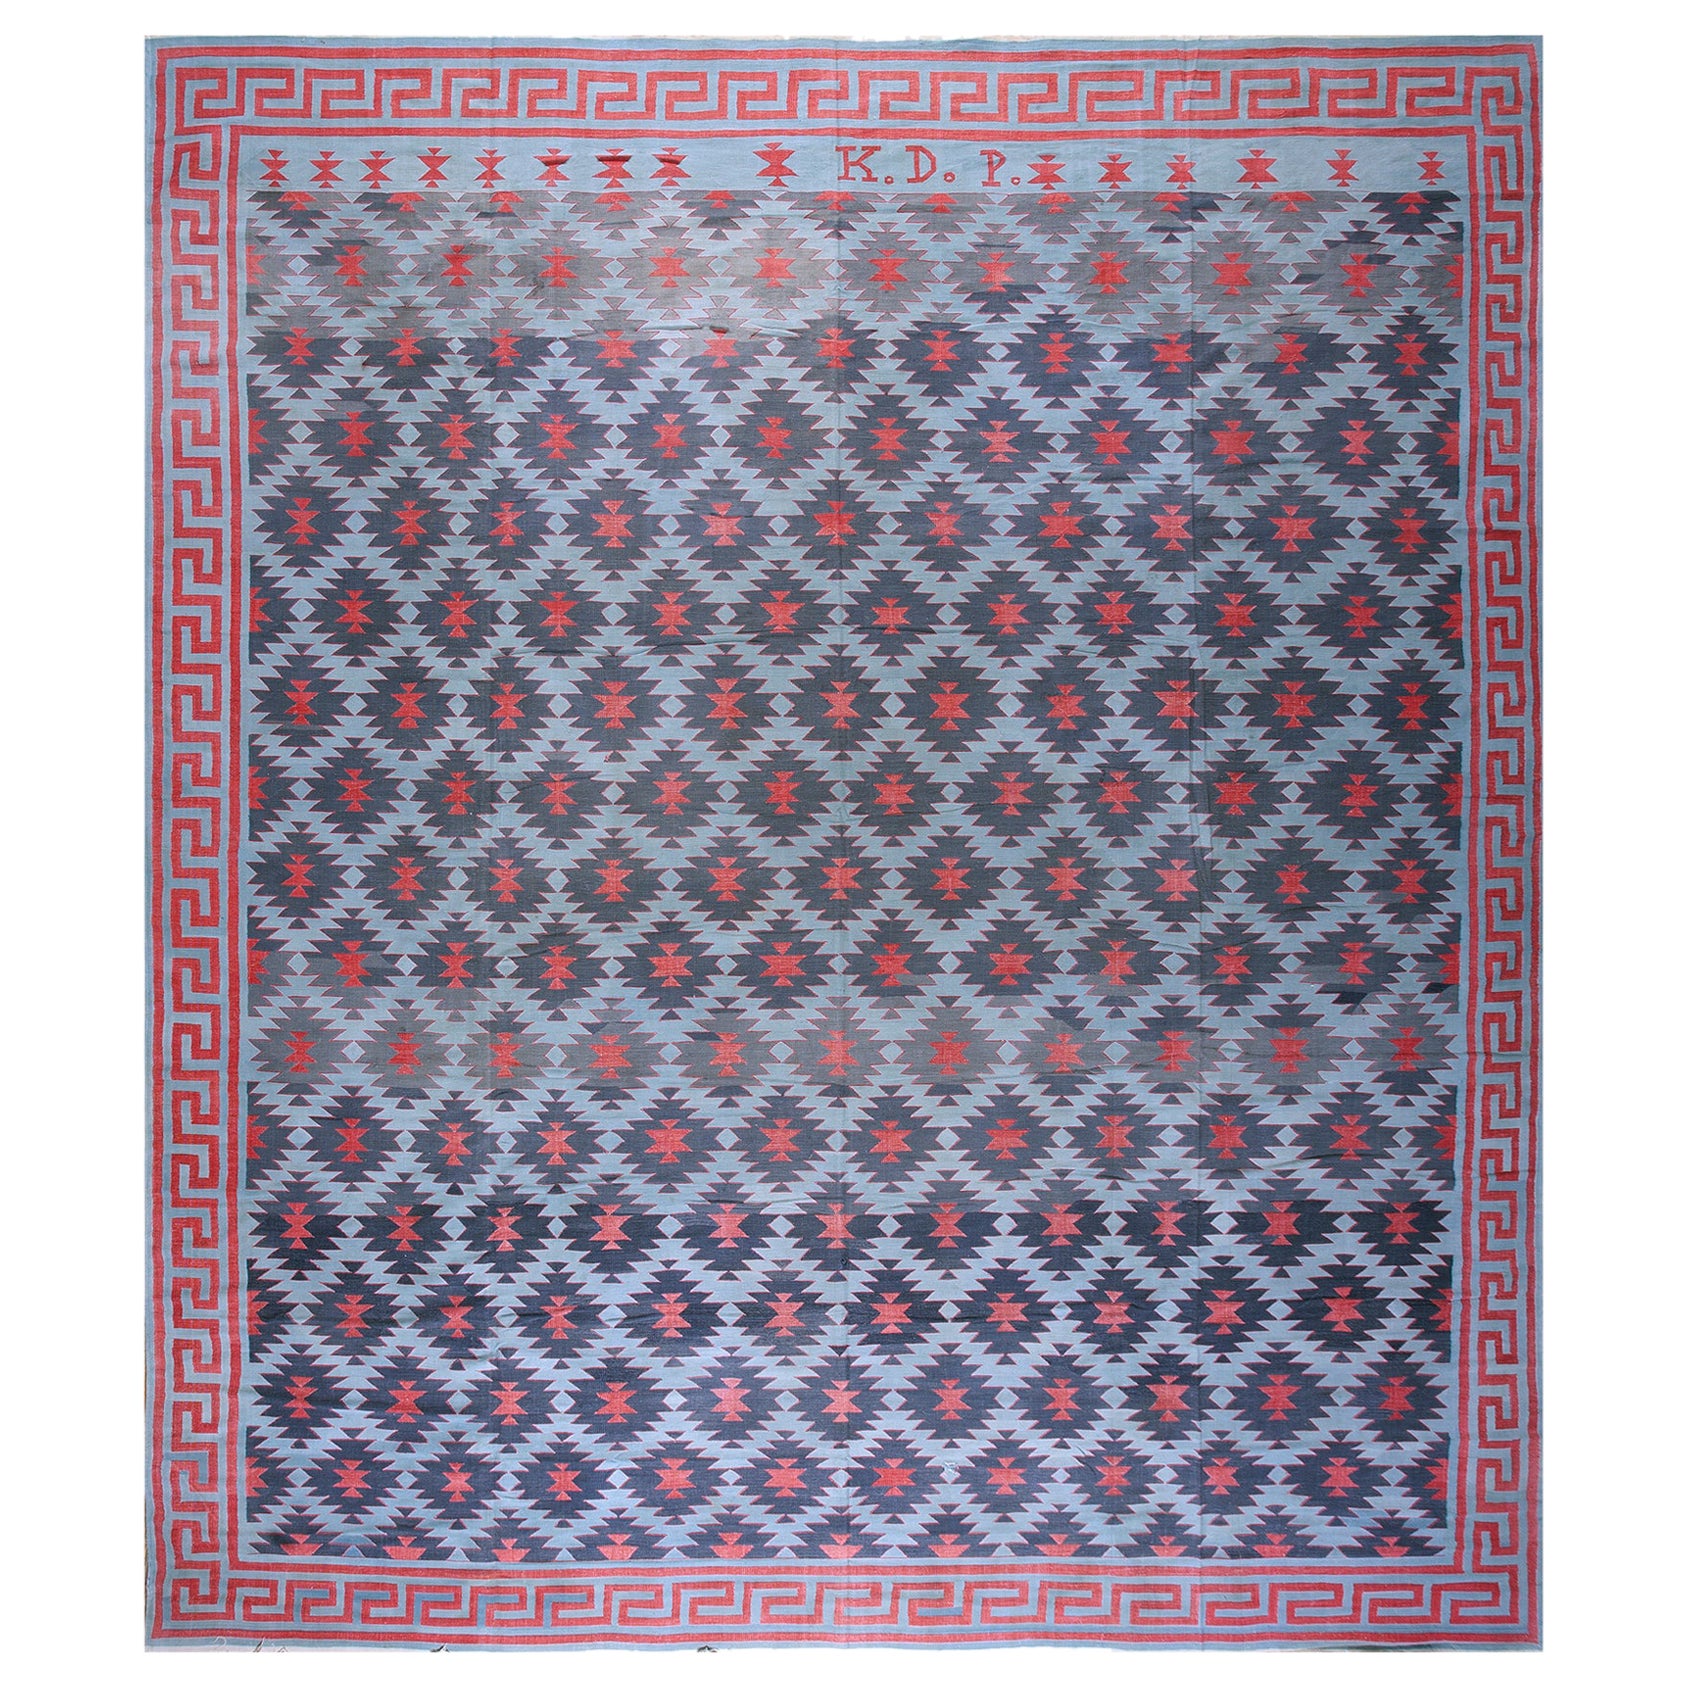 1930s Indian Cotton Dhurrie Carpet ( 12'10" x 14'9" - 392 x 450 ) For Sale